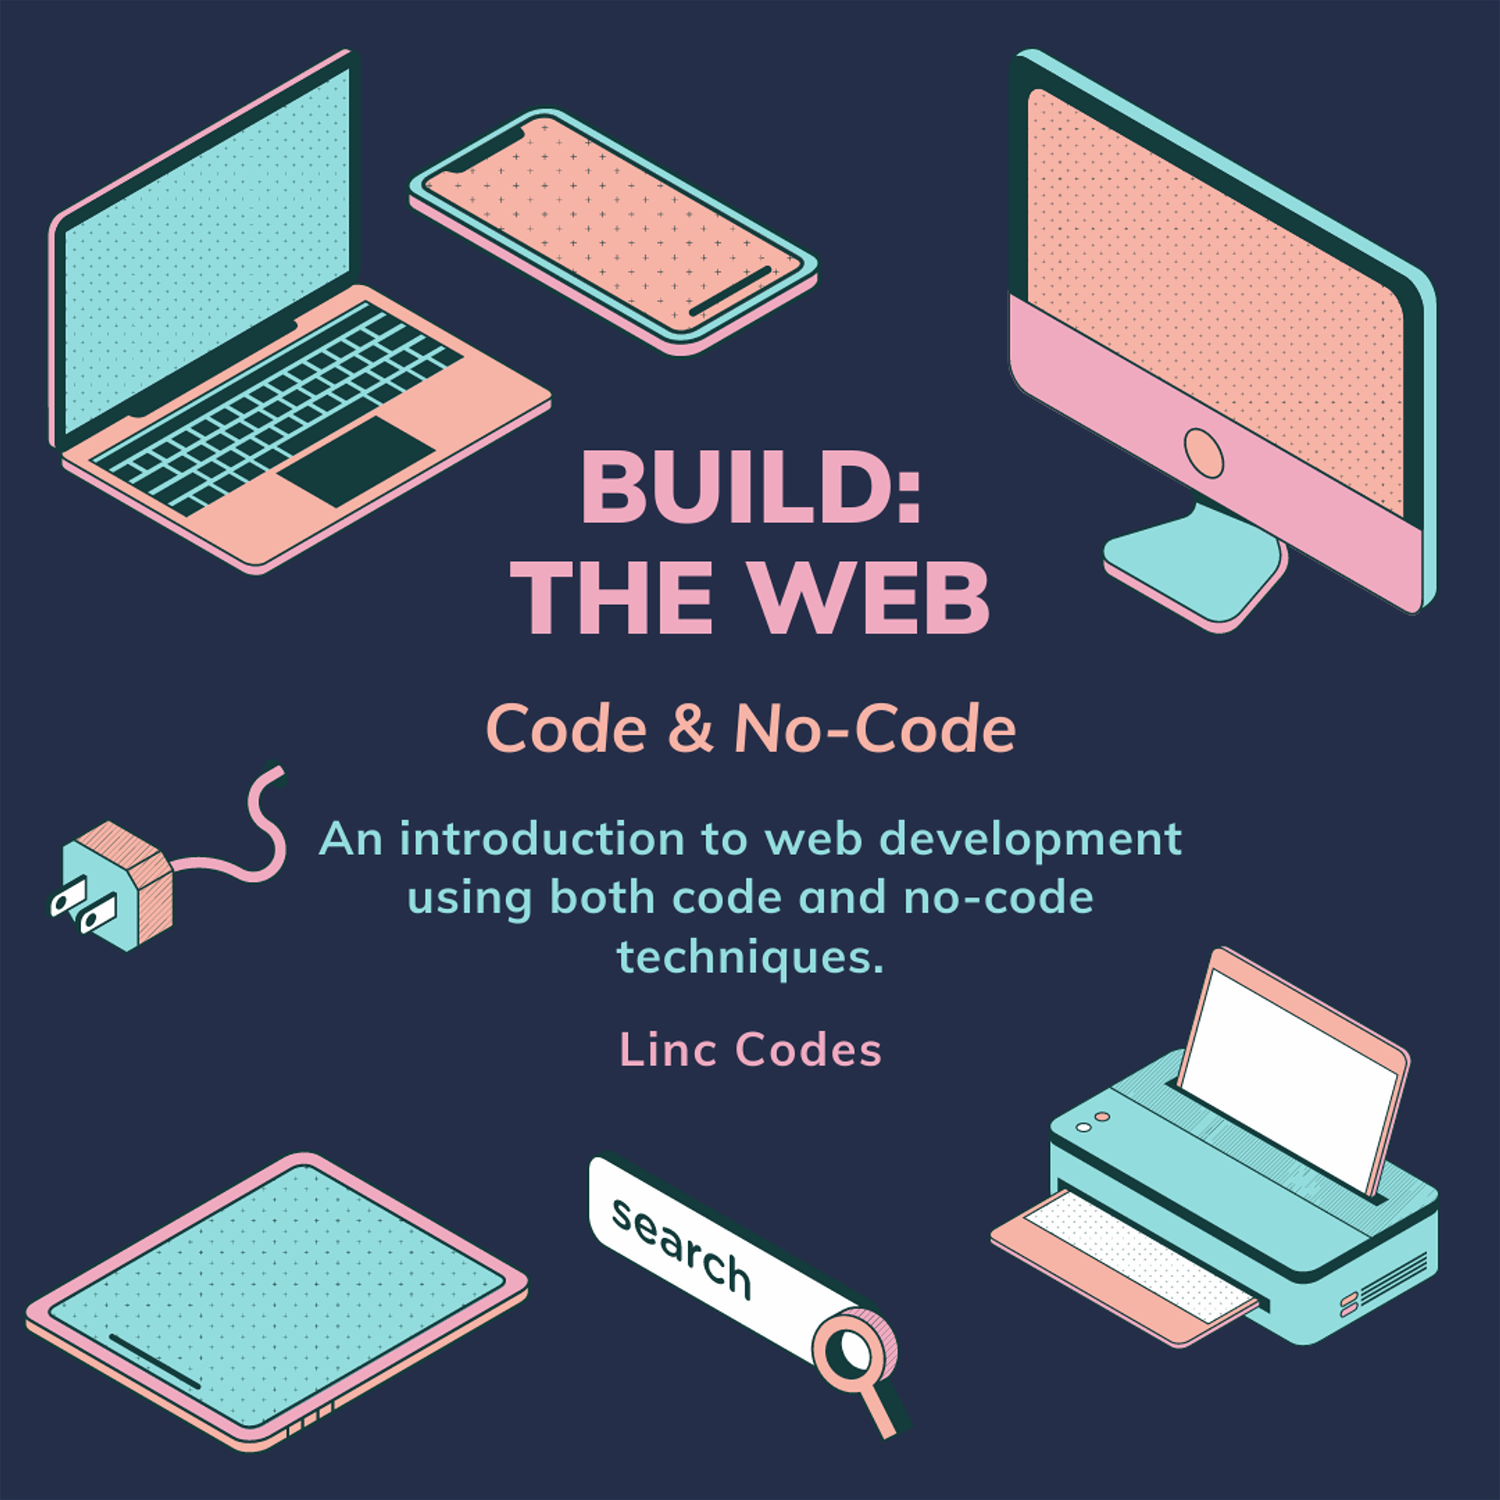 Build: The Web